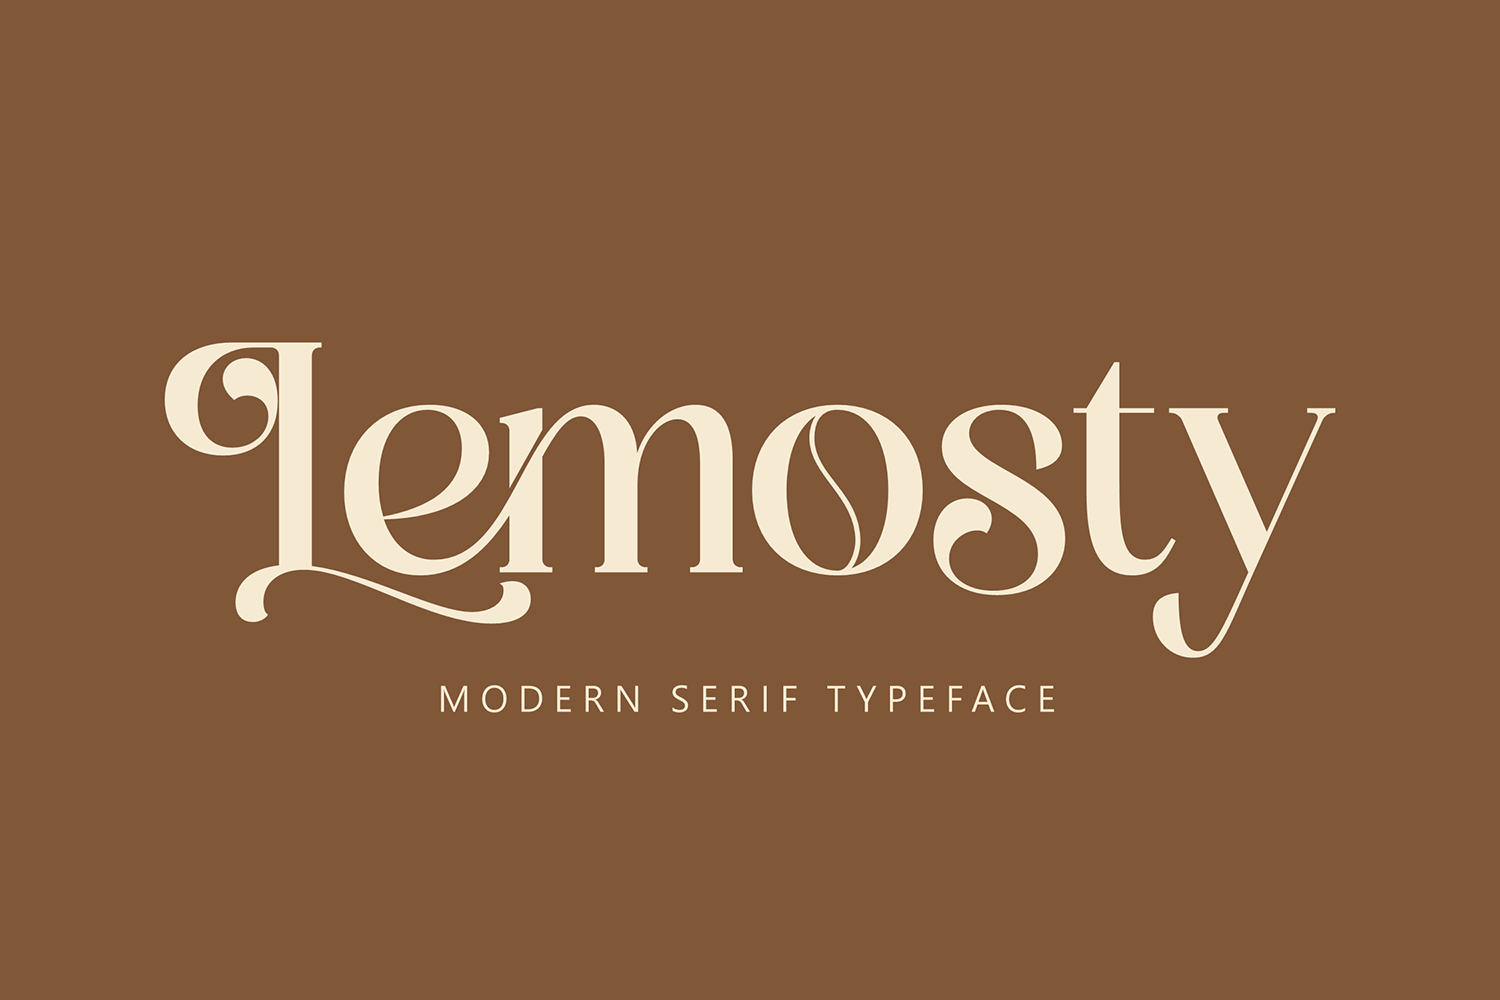 Lemosty Free Font